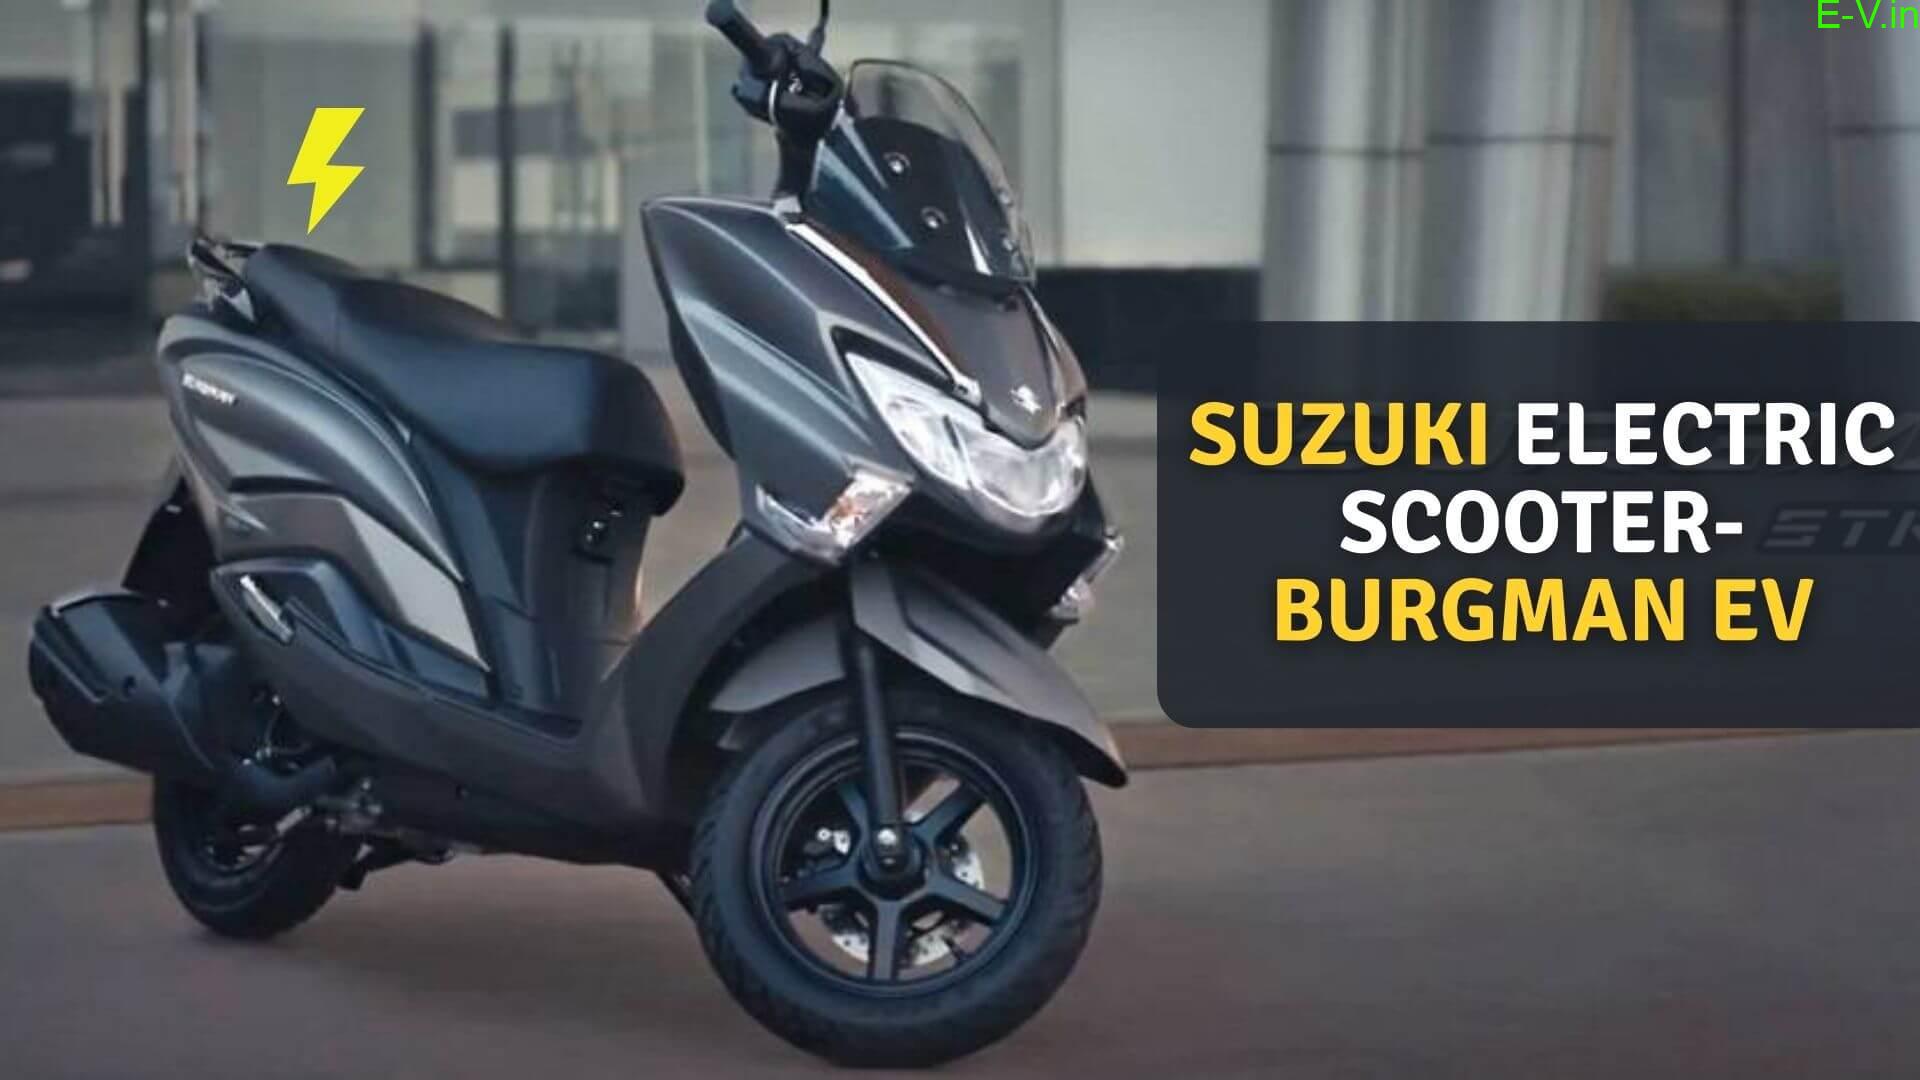 The beginning of an electric vehicle era for Suzuki